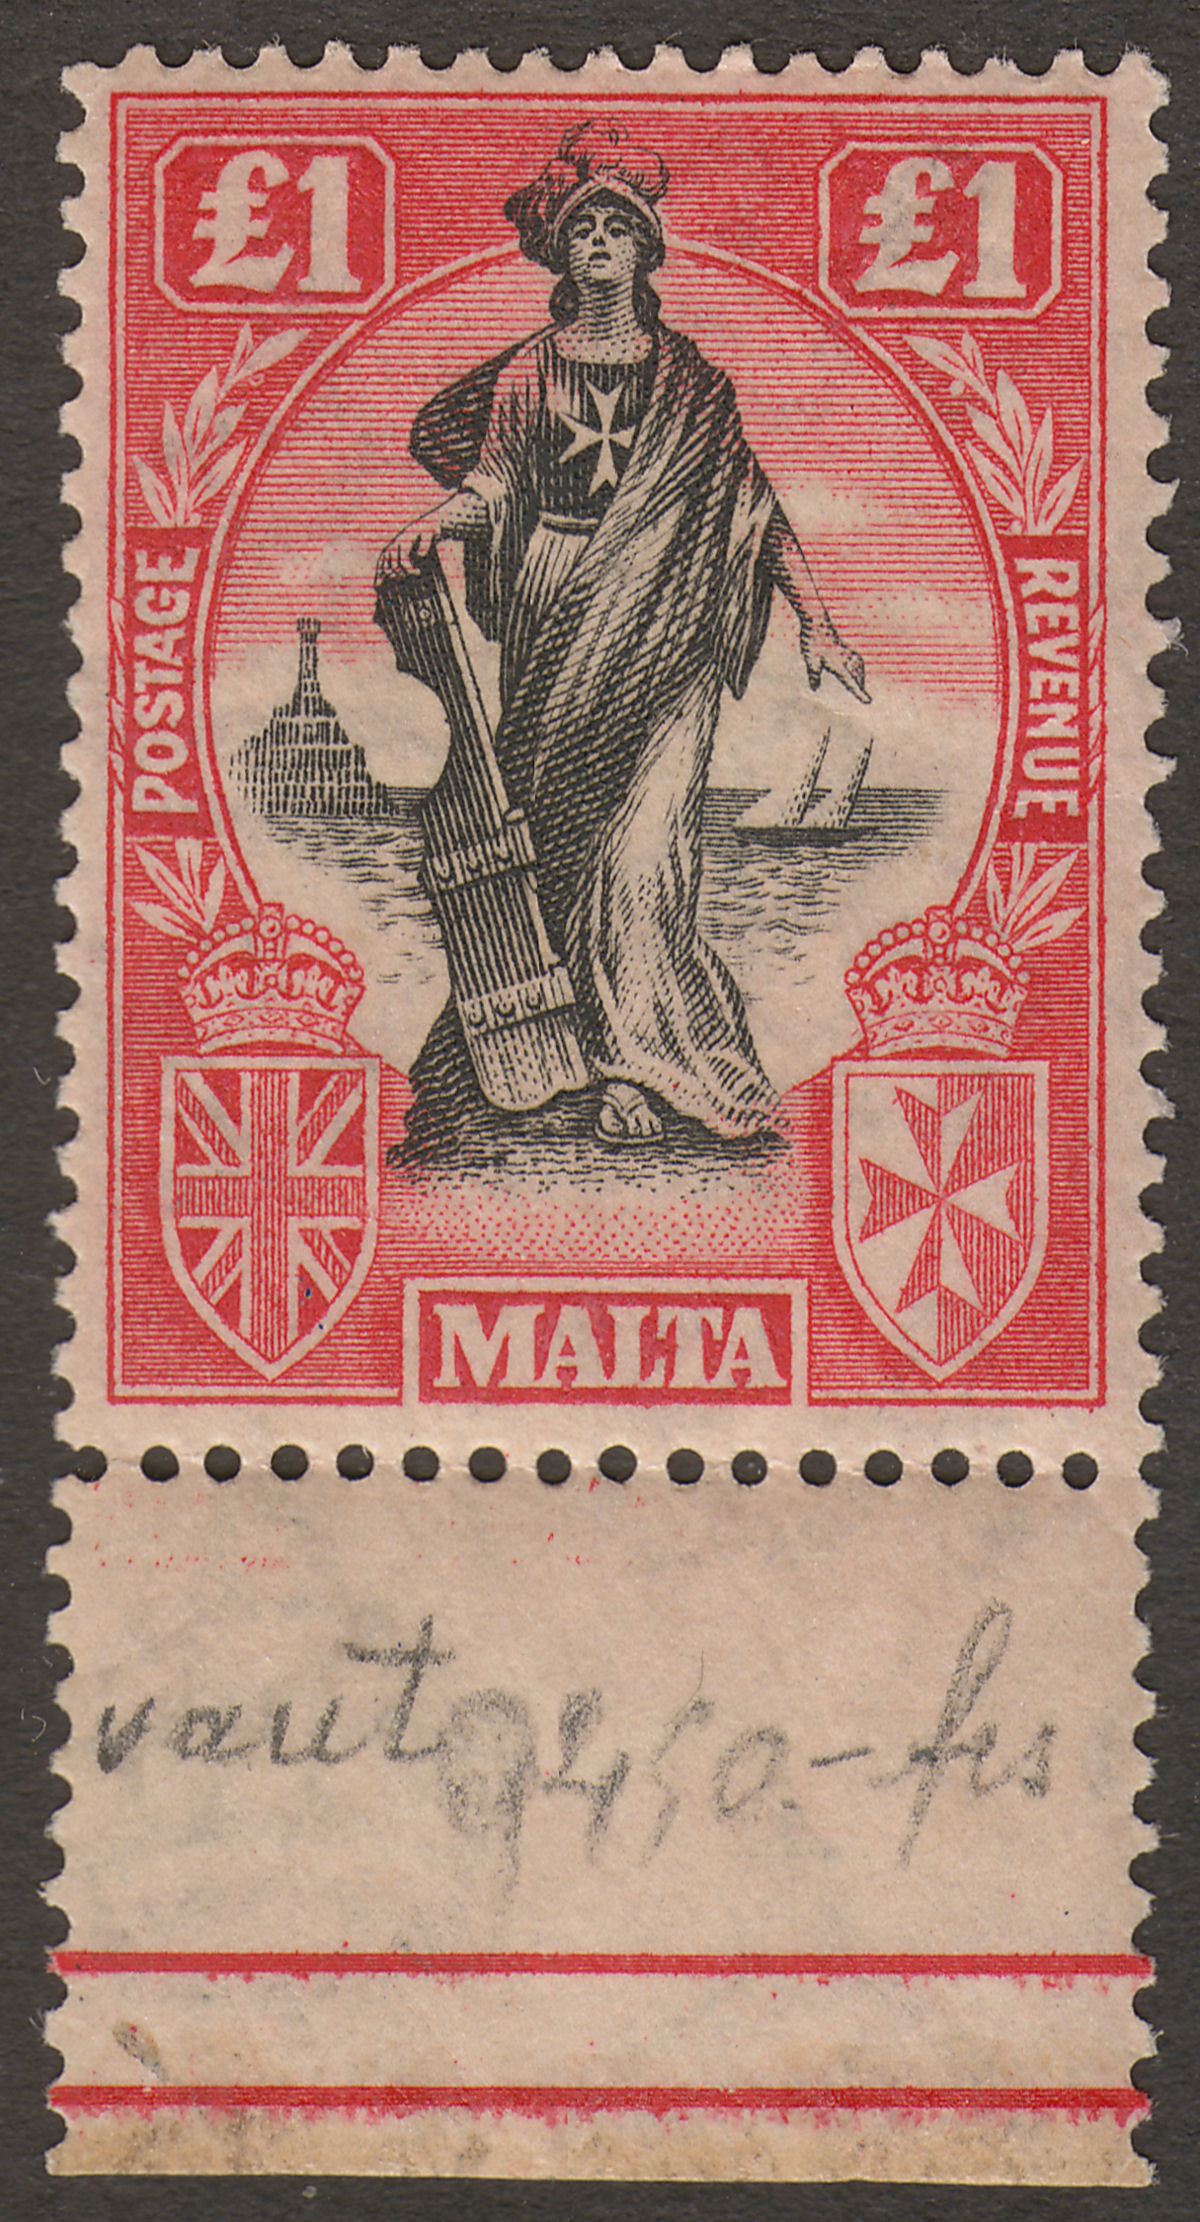 Malta 1925 KGV Figure £1 Black and Bright Carmine wmk Upright Mint SG140 toned